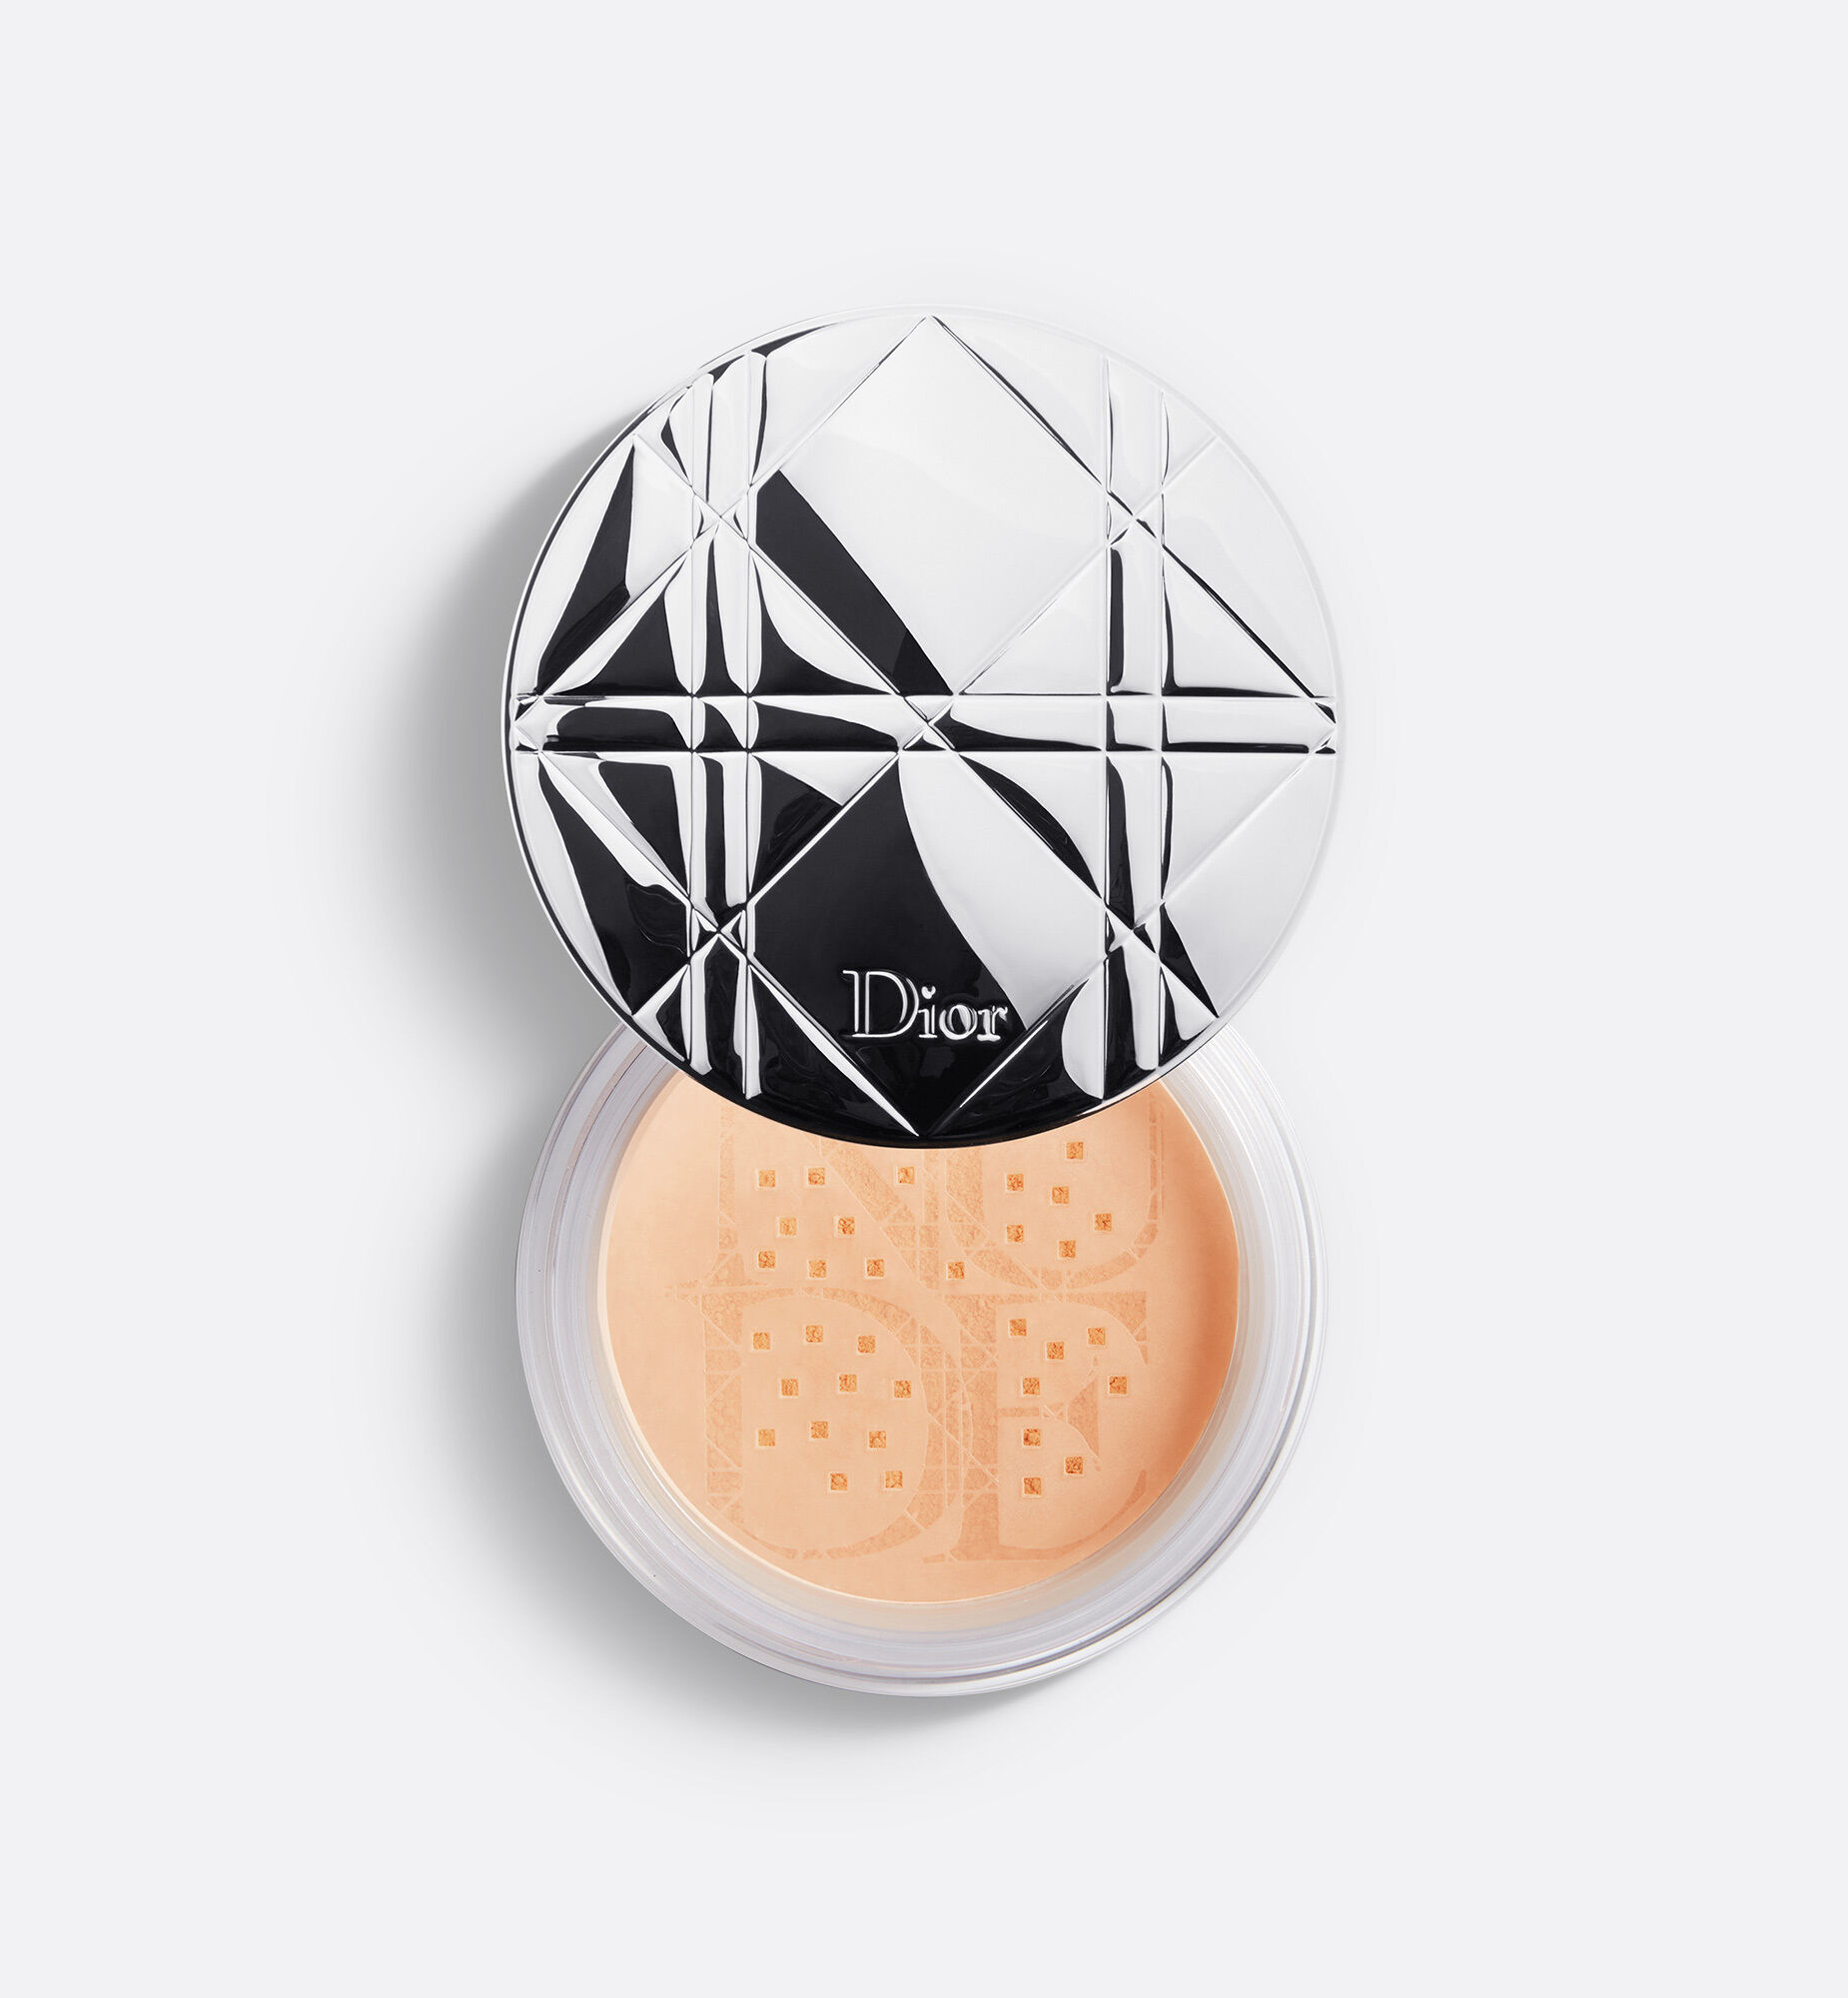 Diorskin Nude Air Loose Powder - Complexion - Make-Up | DIOR